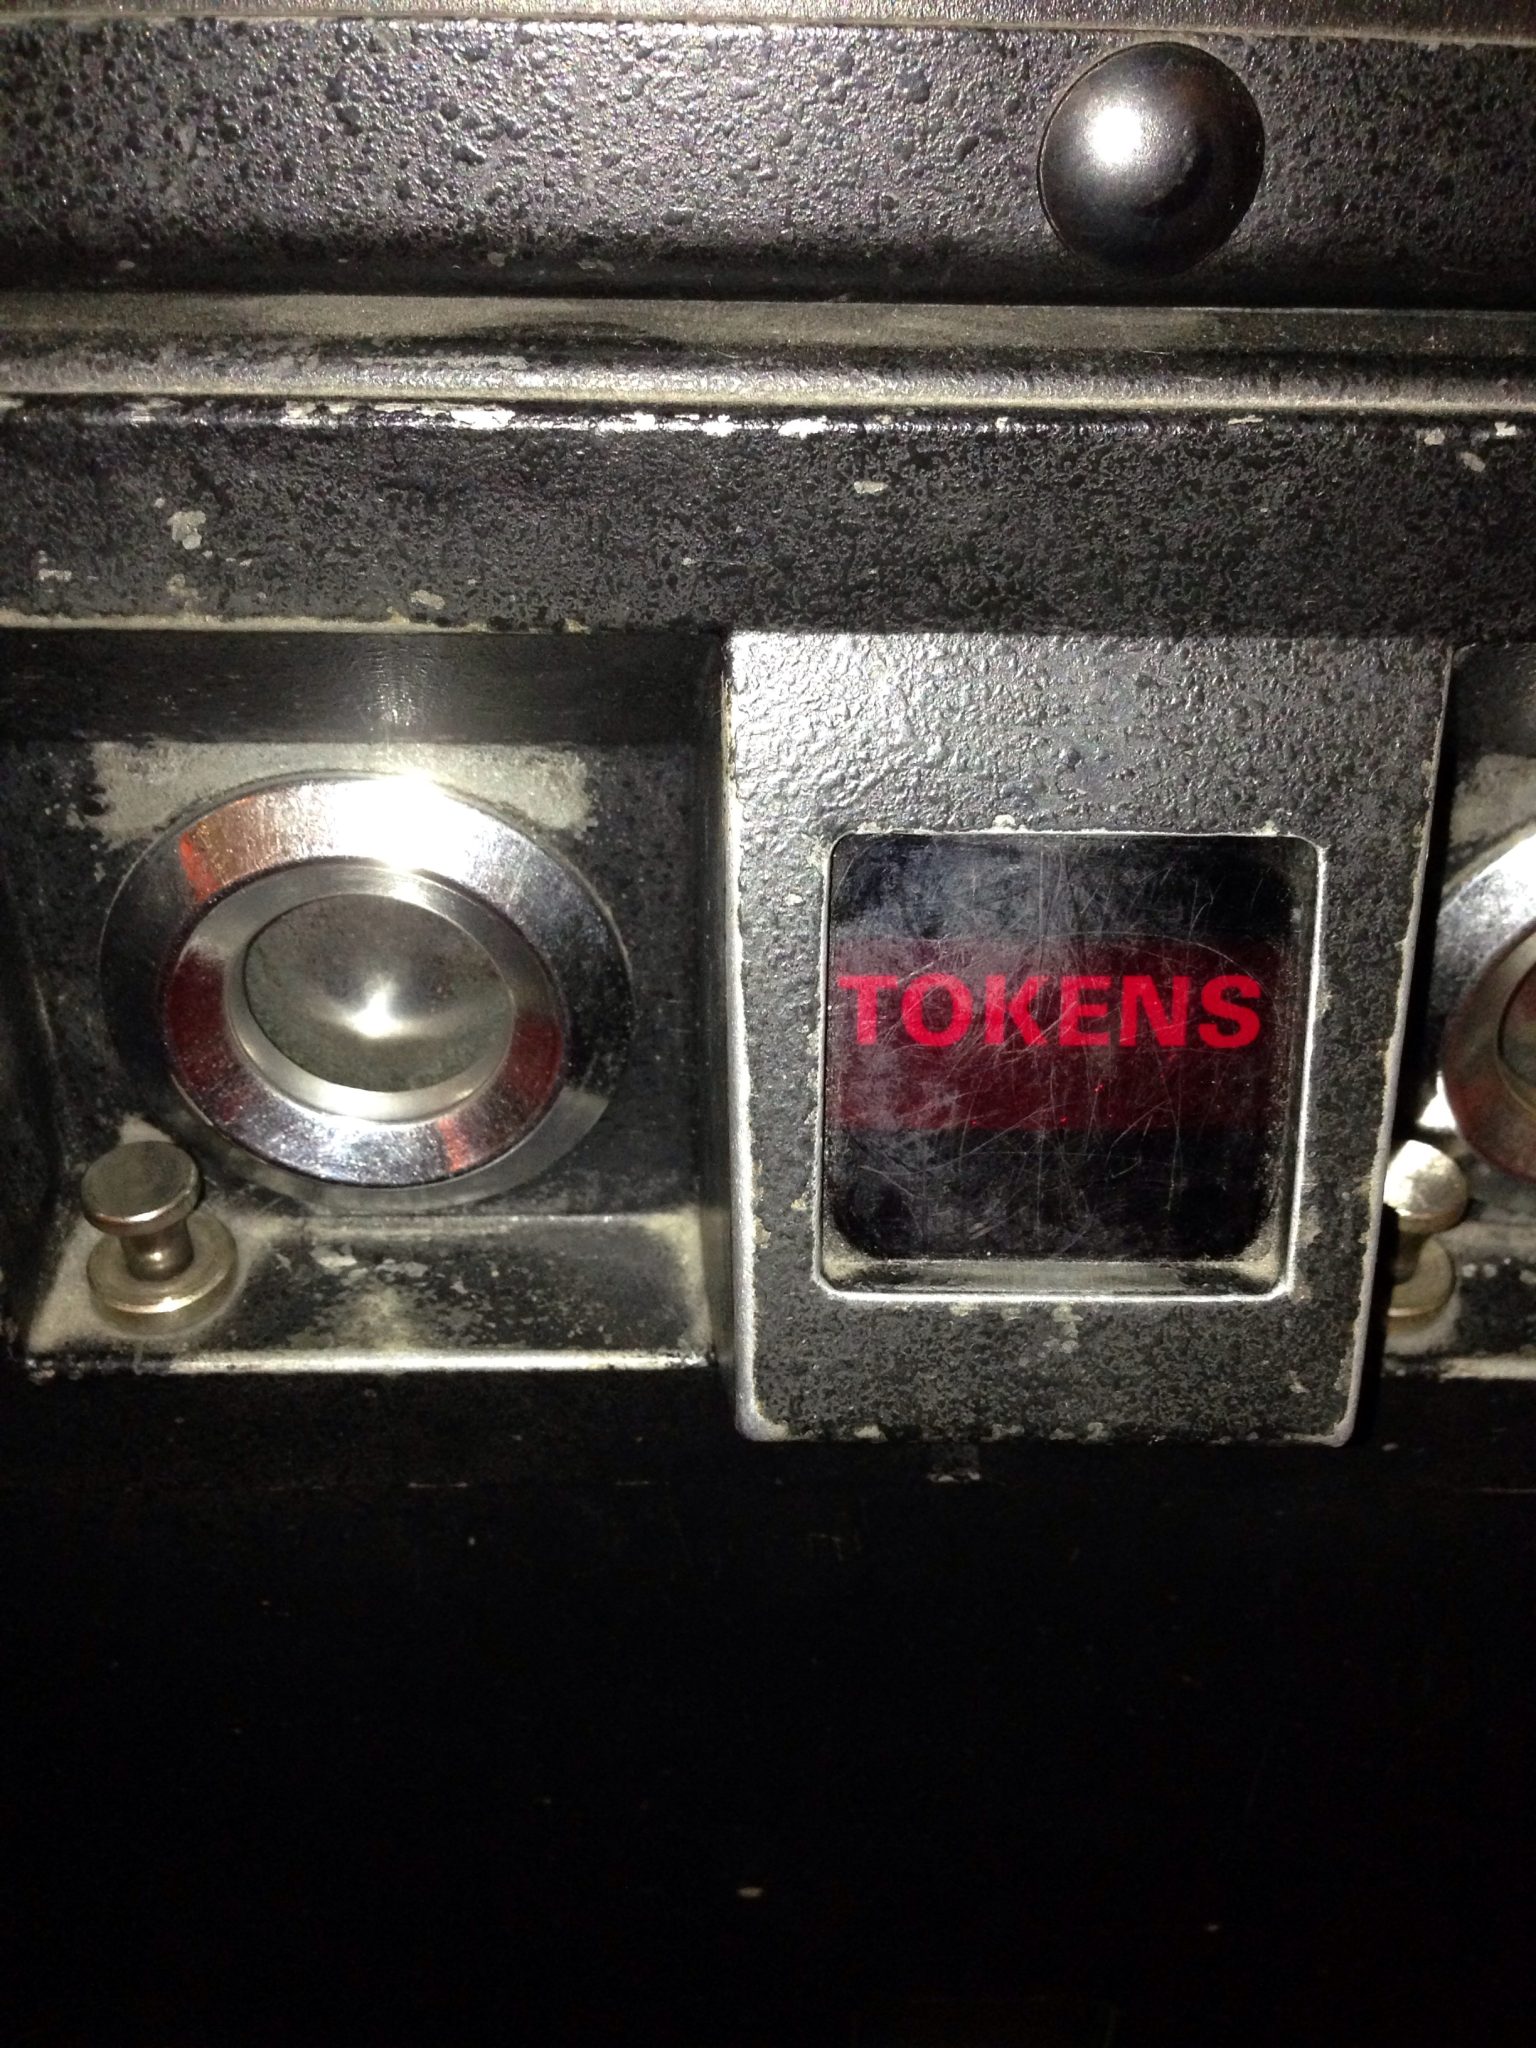 A token slot on an arcade game cabinet.